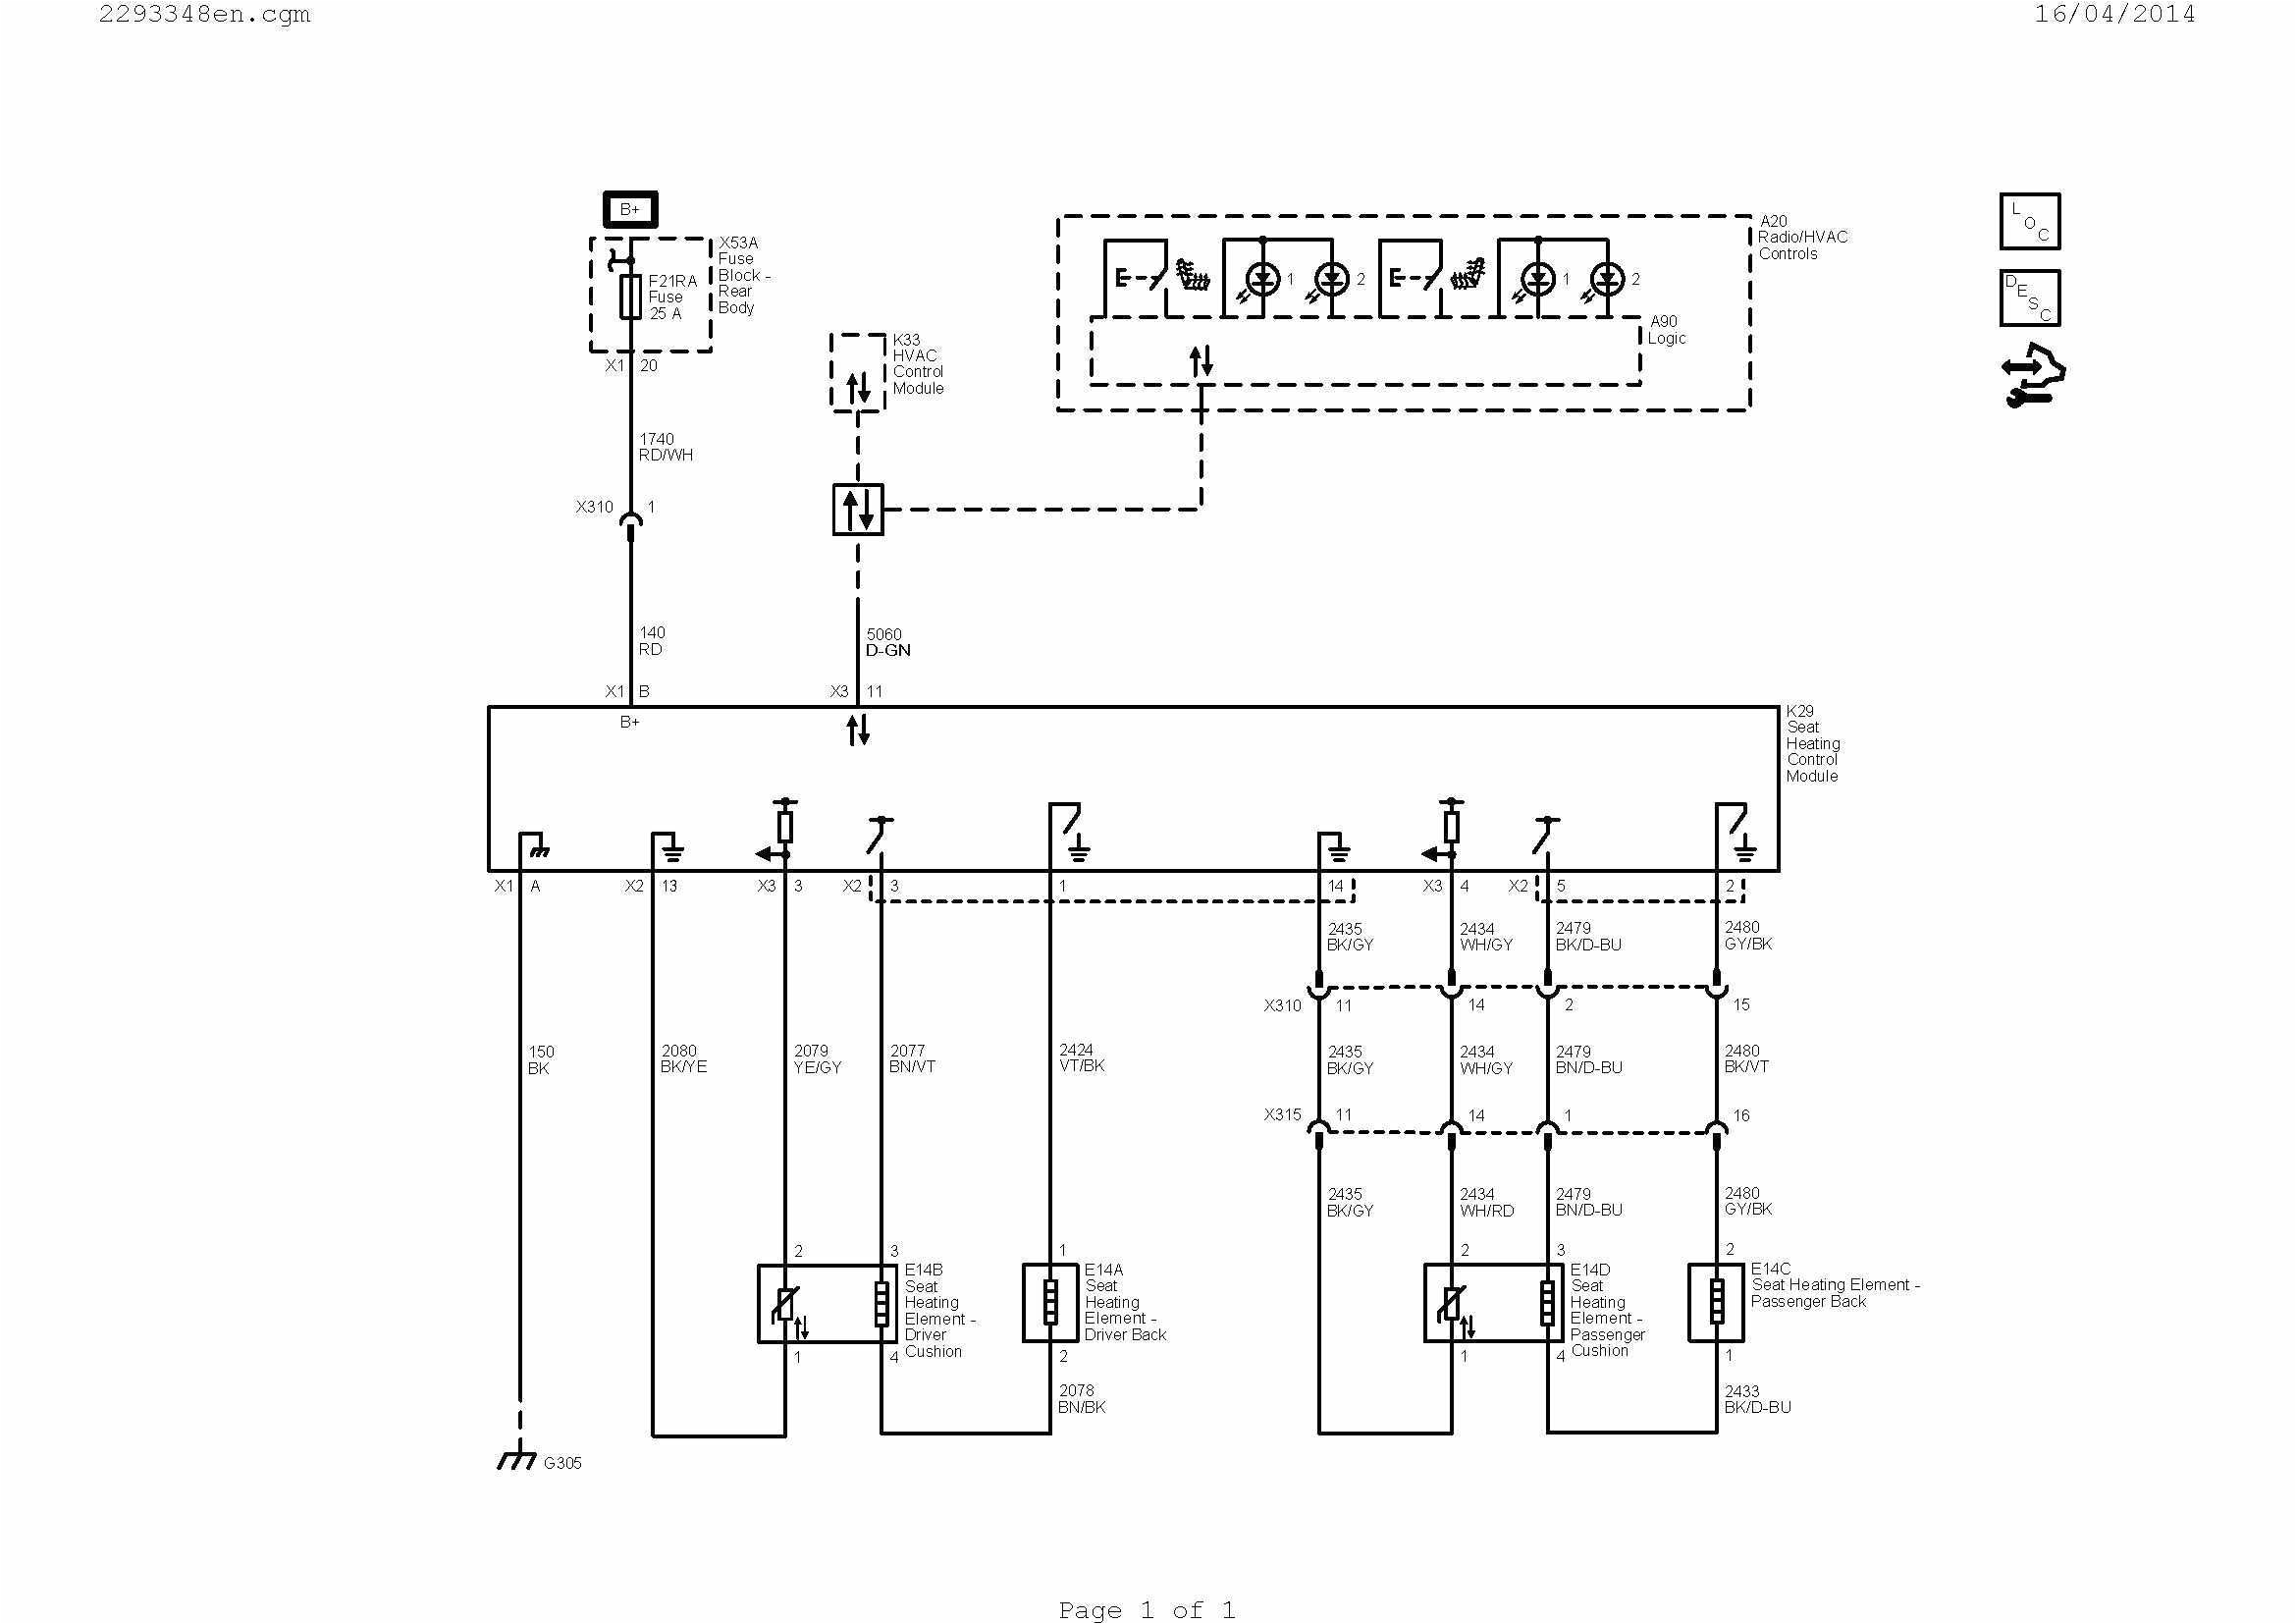 2601ag2 wiring schematic wiring diagram page 2601ag2 wiring schematic